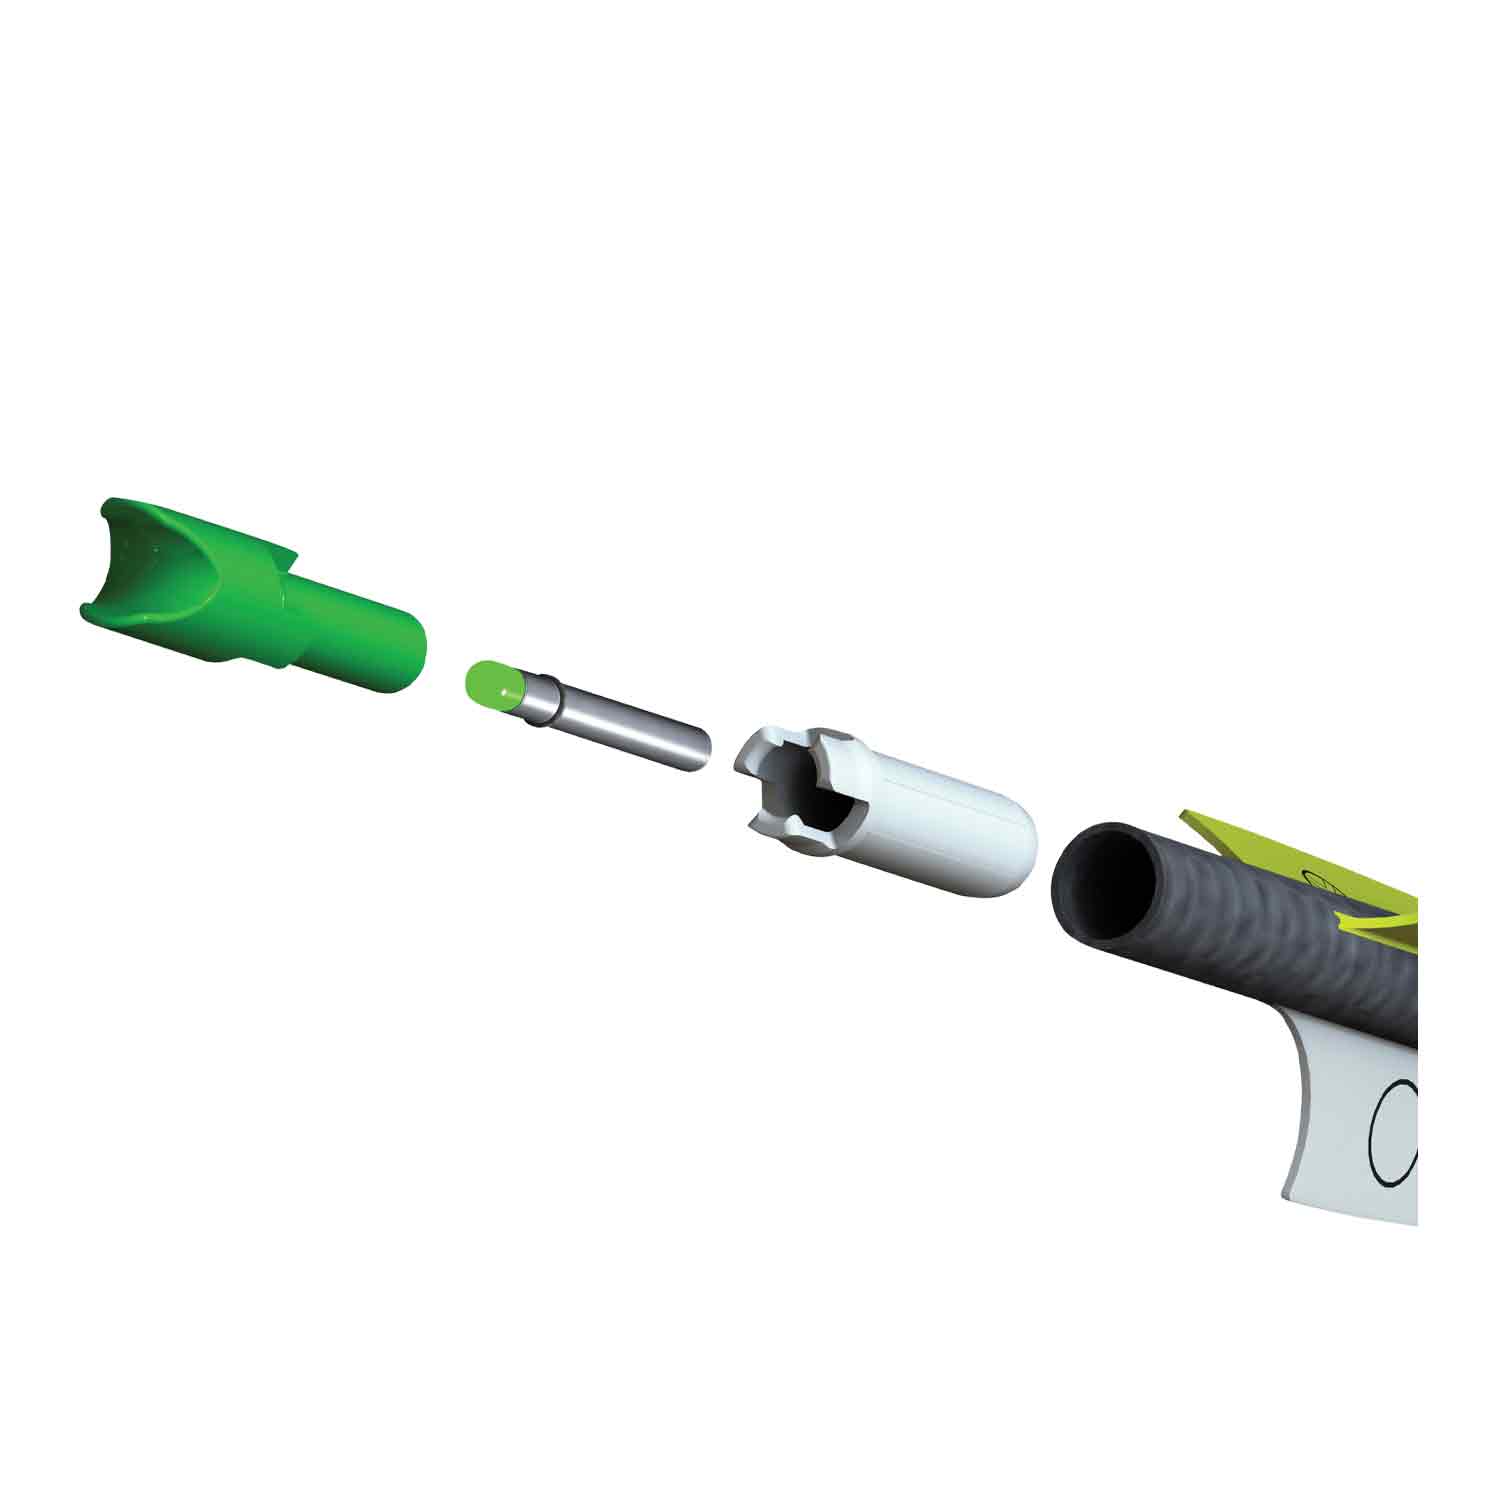 TenPoint Alpha-Brite Lighted Nock System (Green)